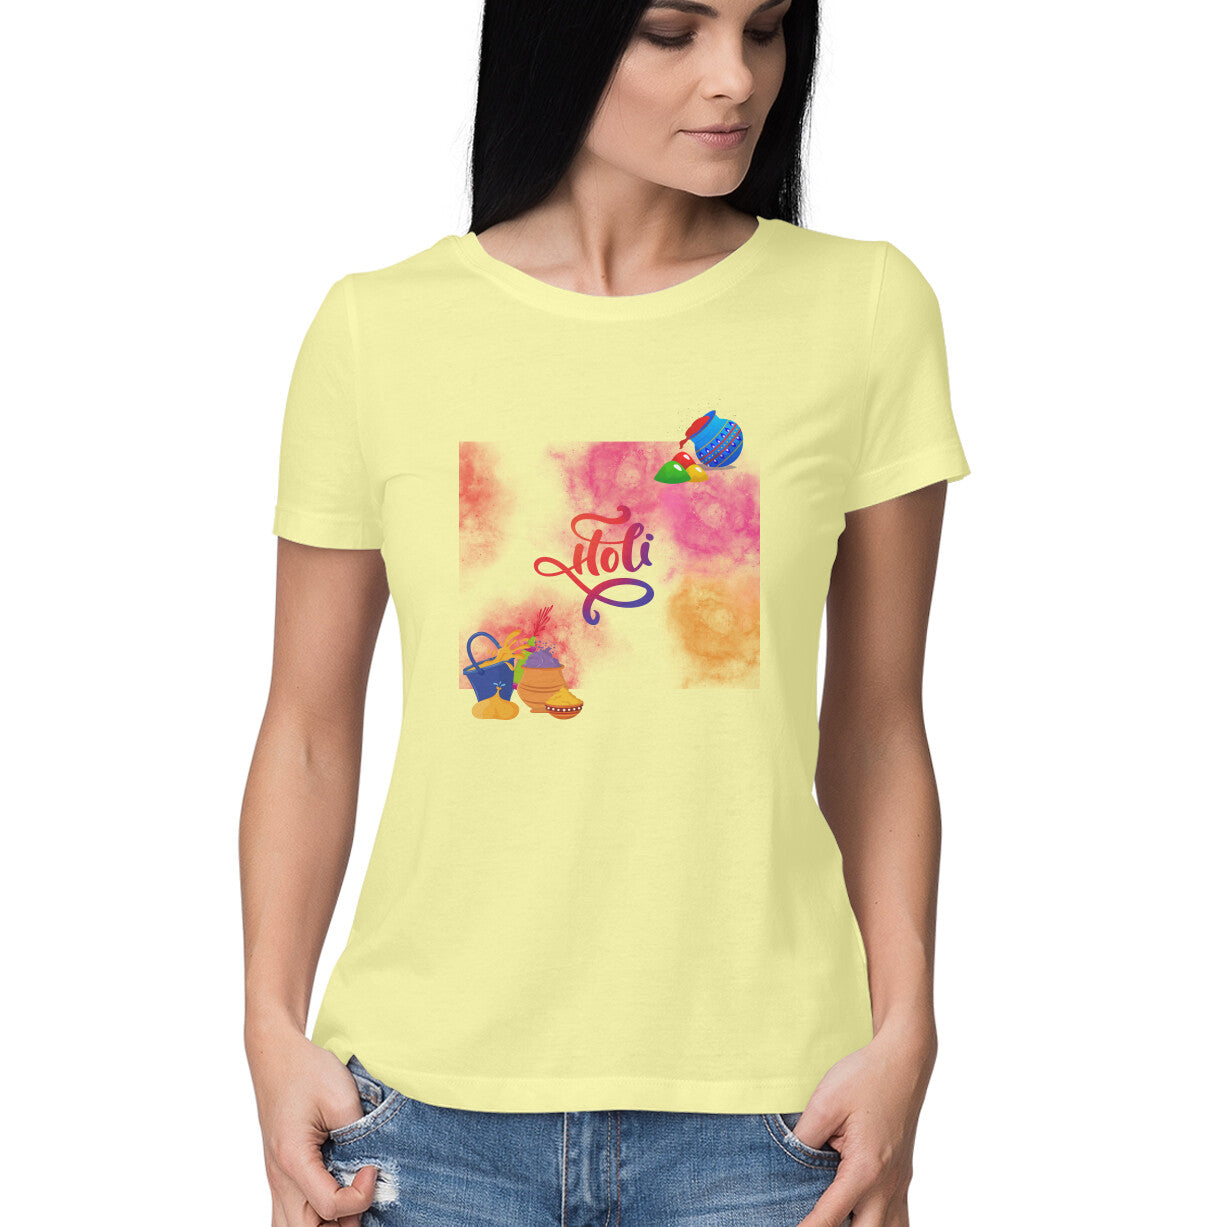 Stylish Celebration: Women's Round Neck T-Shirt with Indian Festival Colors Design